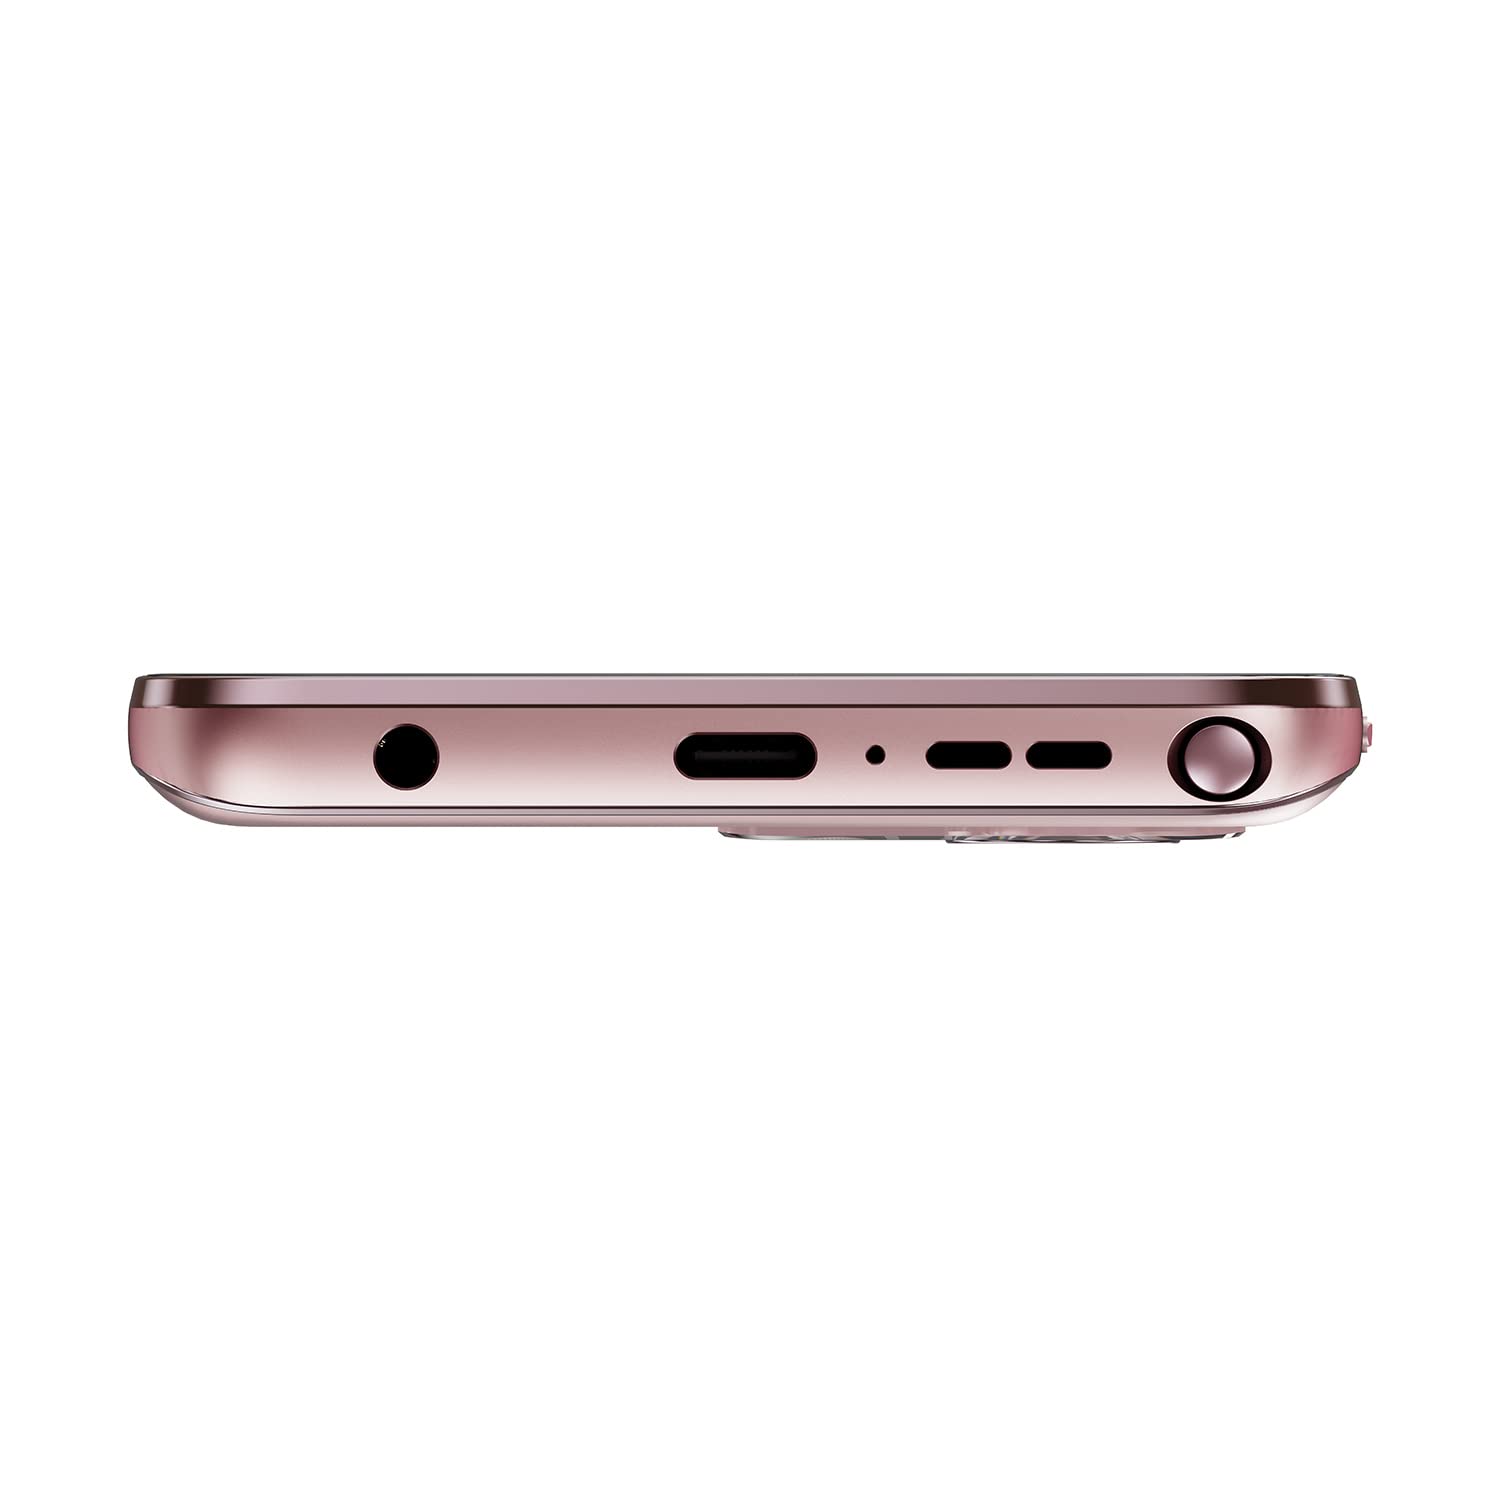 Motorola Moto G Stylus | 2023 | Unlocked | Made for US 4/64GB | 50 MP Camera | Glam Pink, 162.89 x 74.08 x 9.19mm